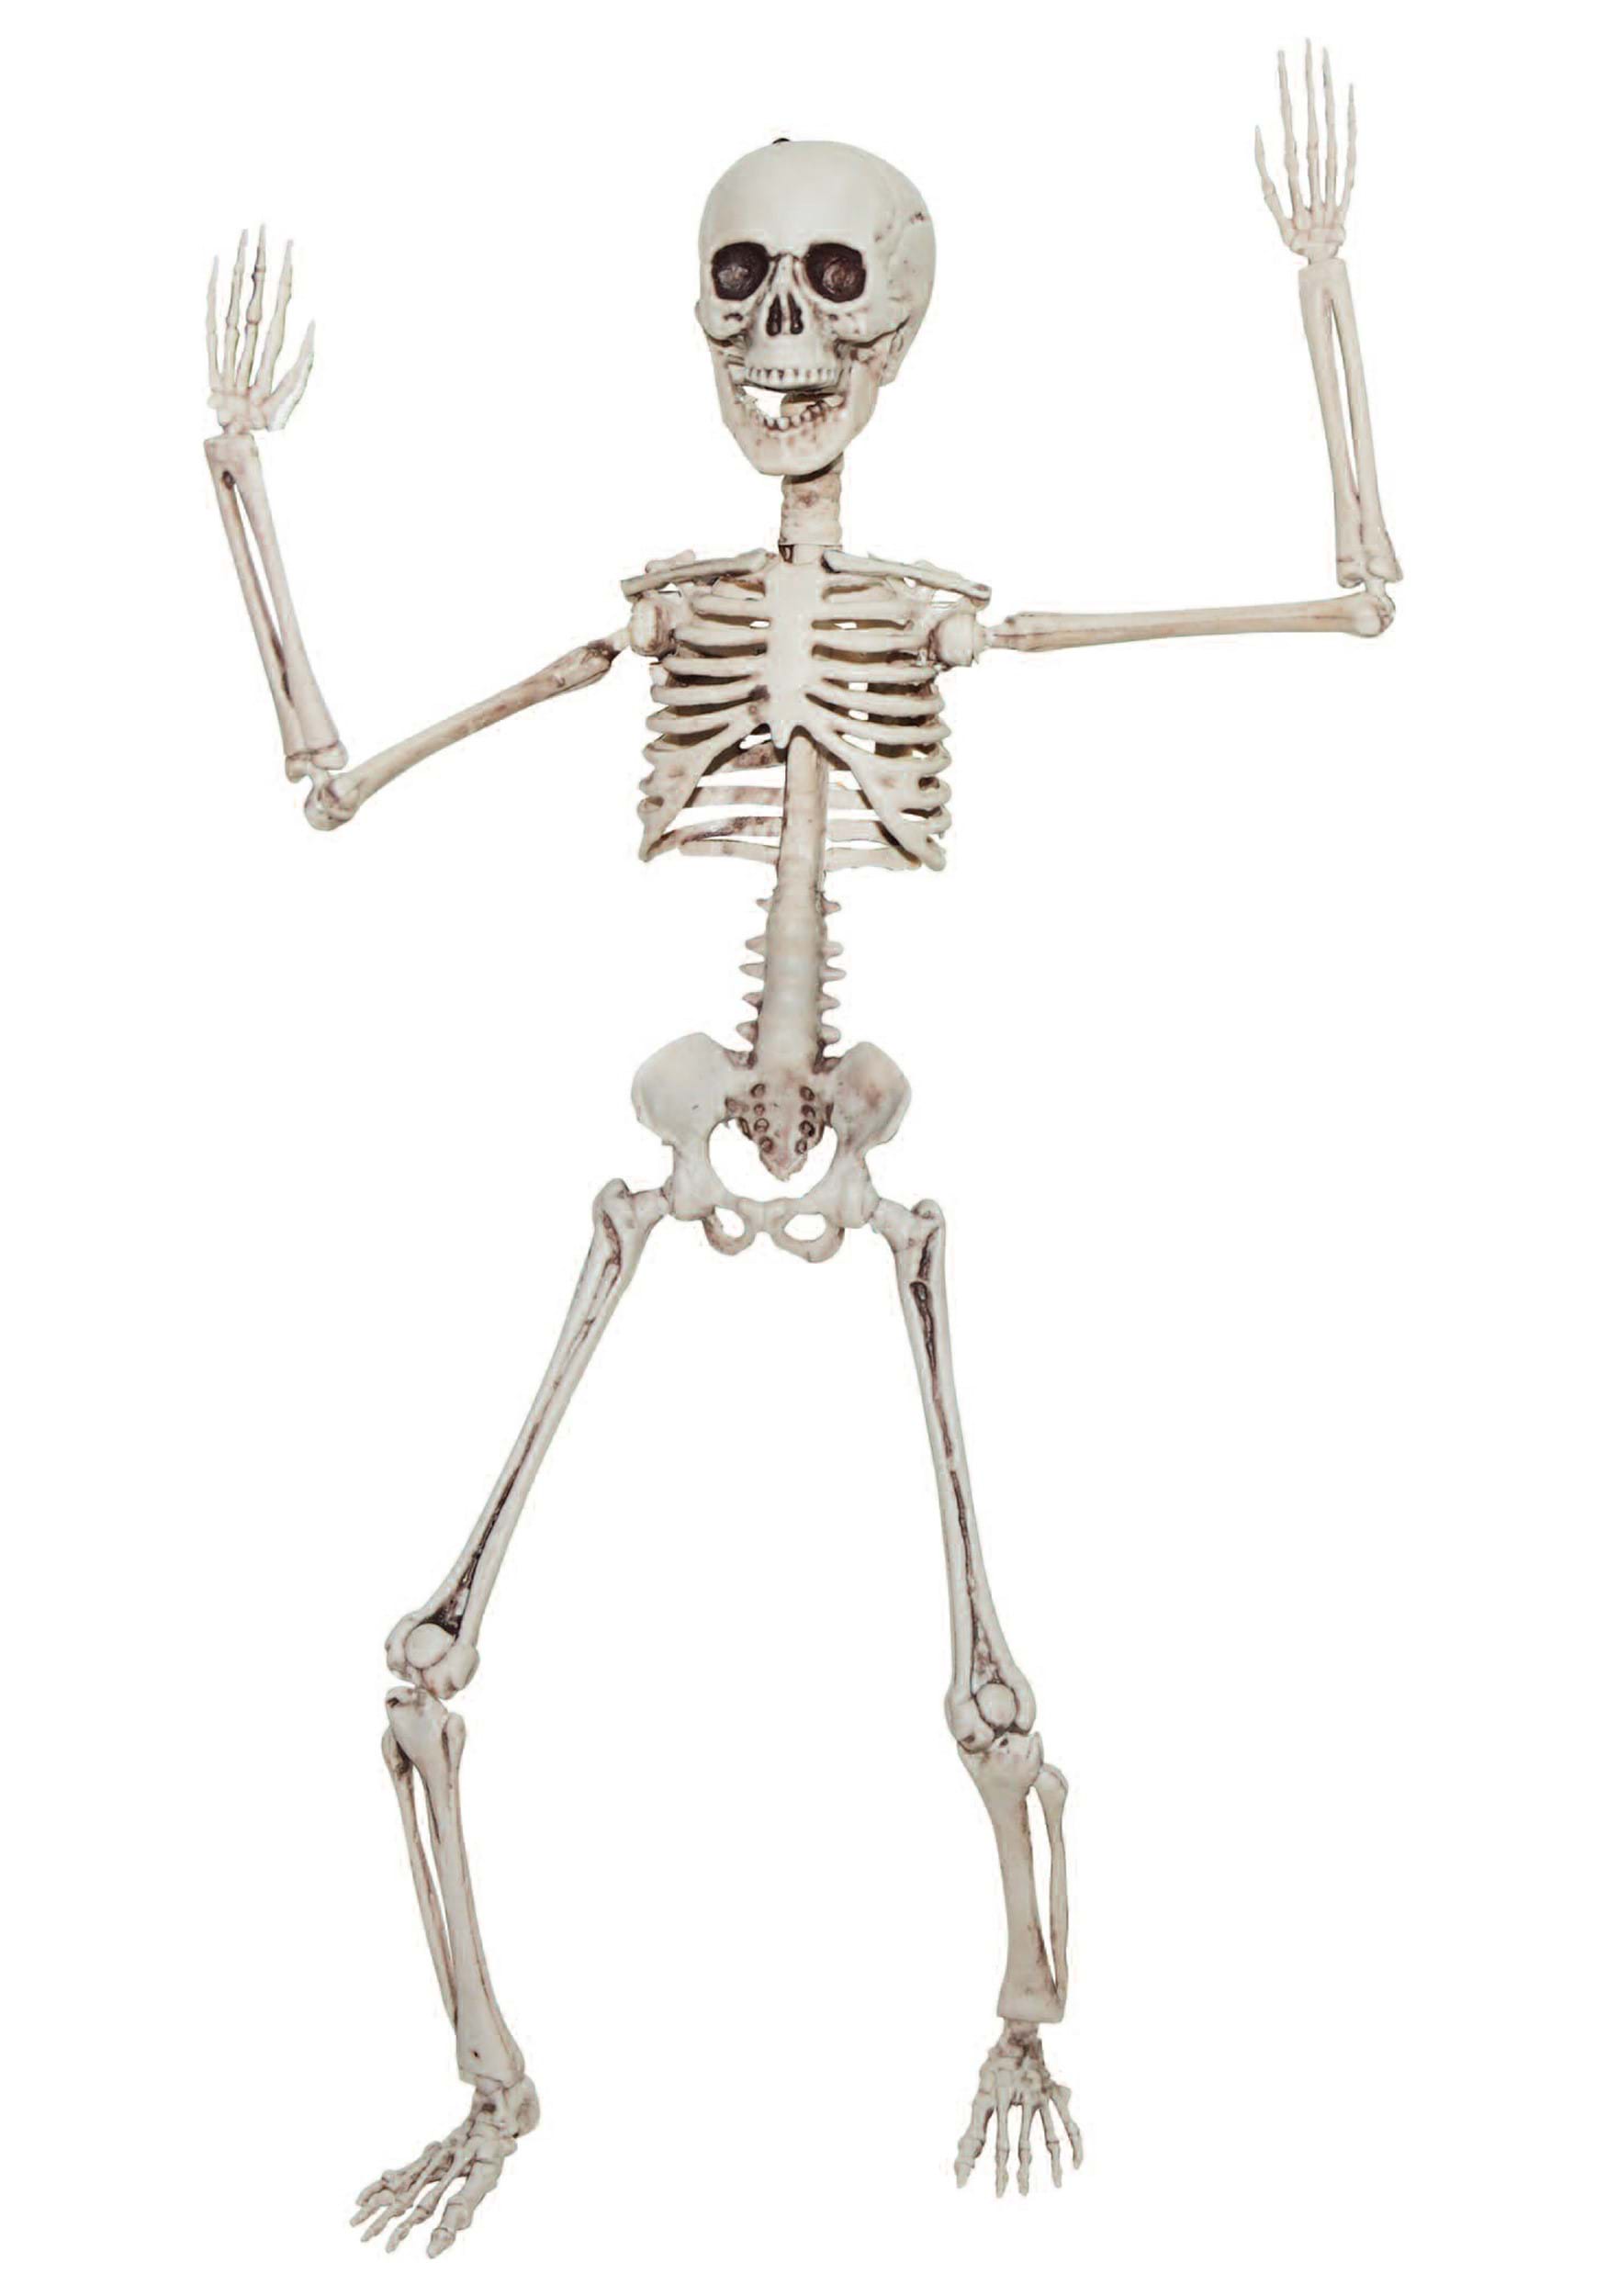 20 Inch Poseable Skeleton Decoration | Posable Skeletons